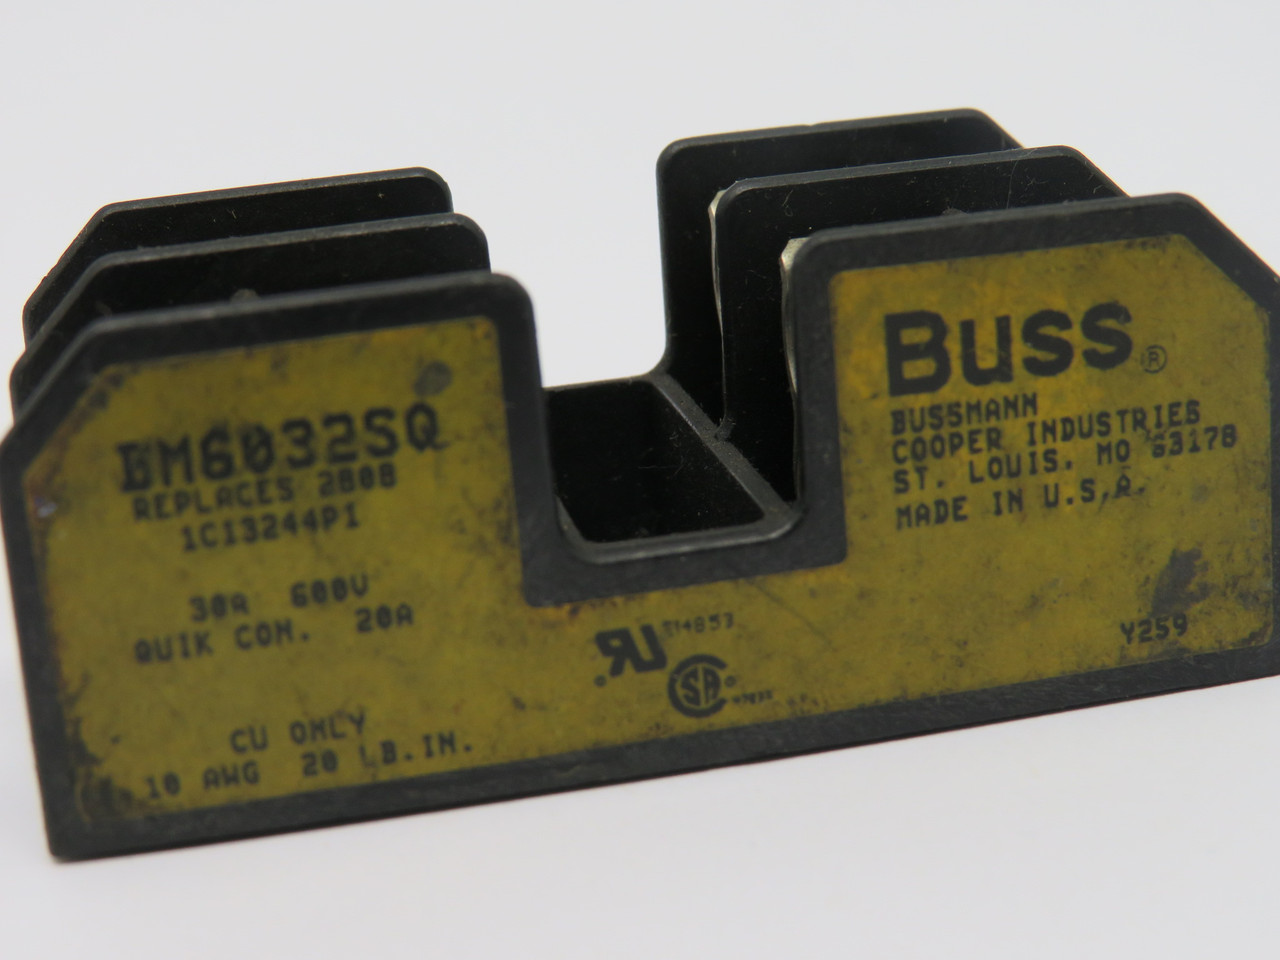 Bussmann BM6032SQ Fuse Holder 30A 600V 2-Pole USED